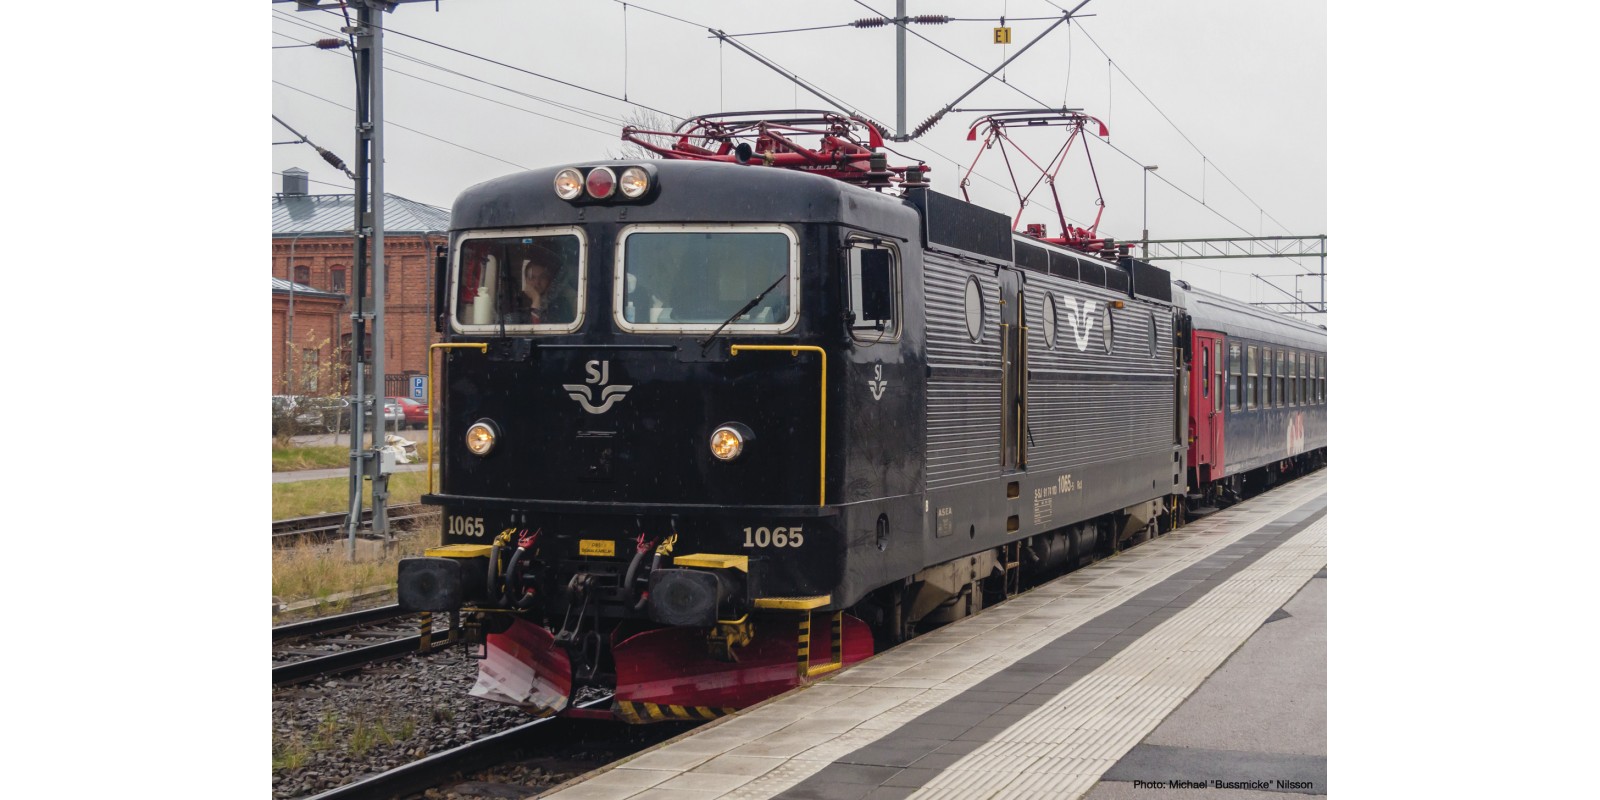 RO70451 - Electric locomotive Rc3, SJ